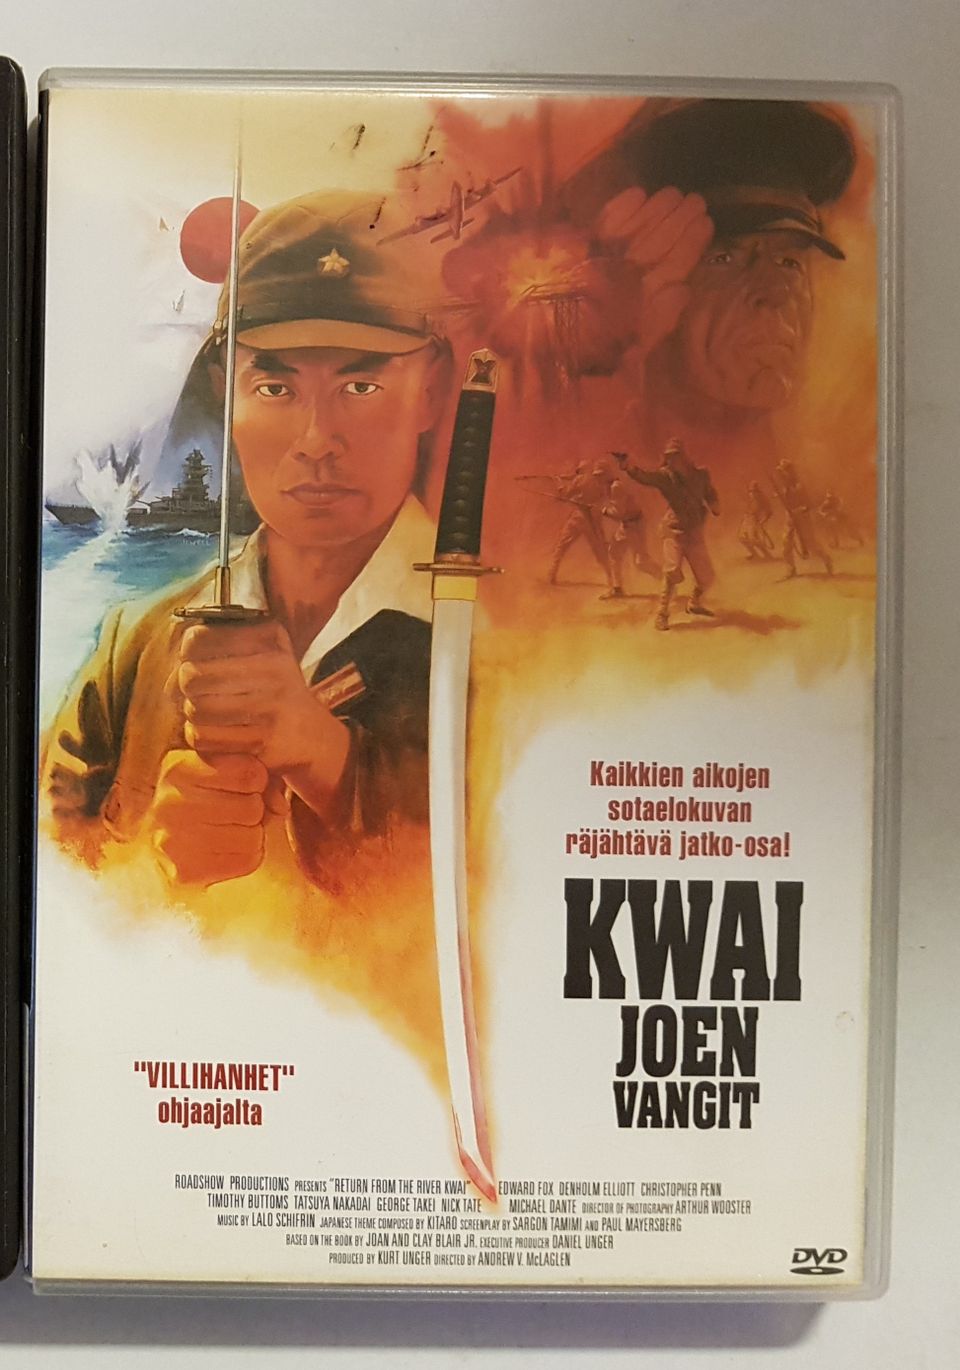 Kwai-joen vangit / Return from the River Kwai